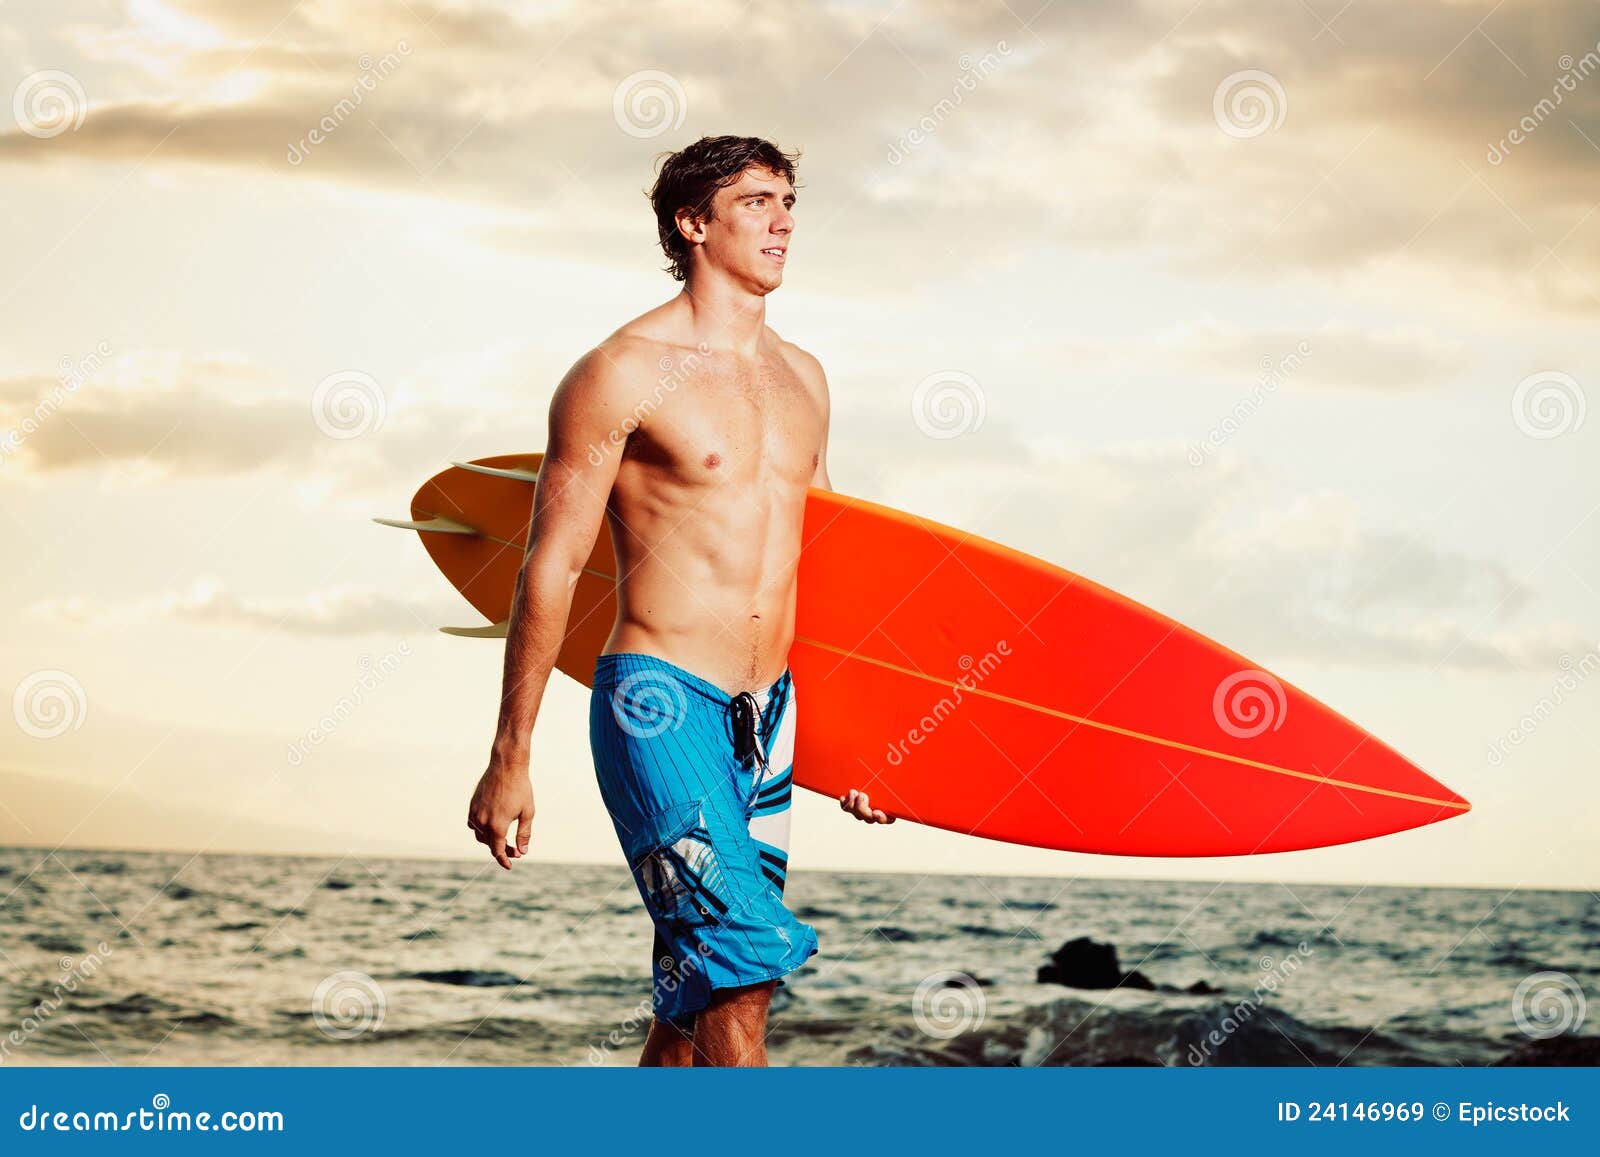 Surfer stock image. Image of coast, holding, space, dude - 24146969